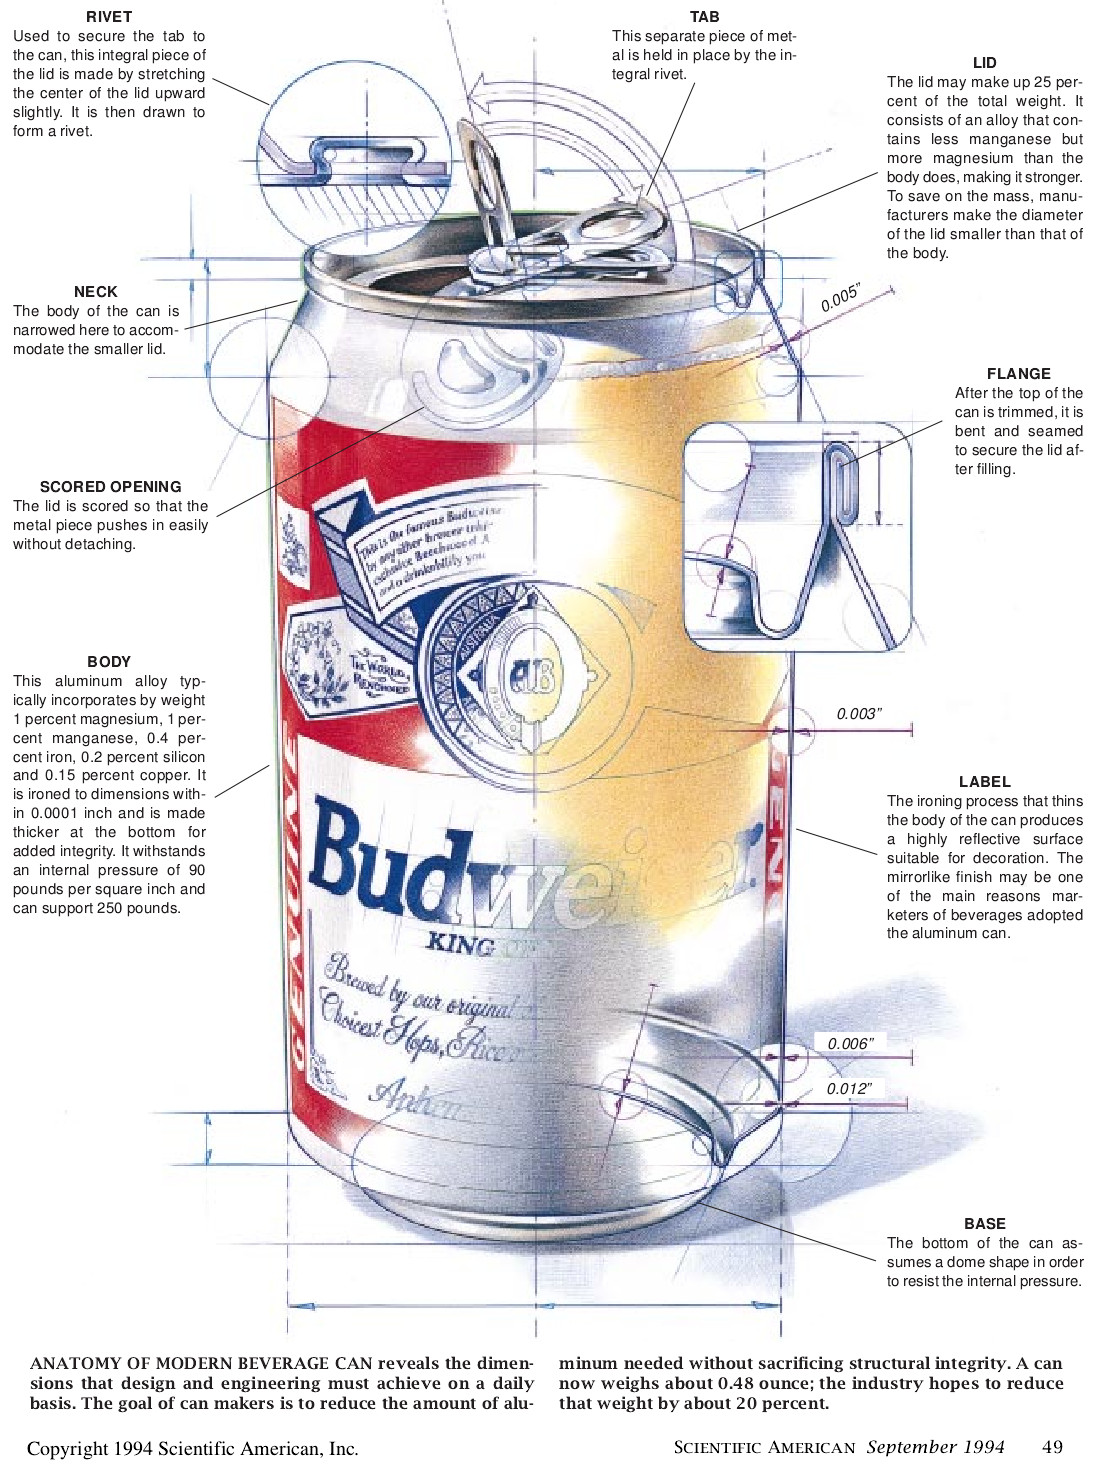 The Aluminum Beverage Can-01.jpg